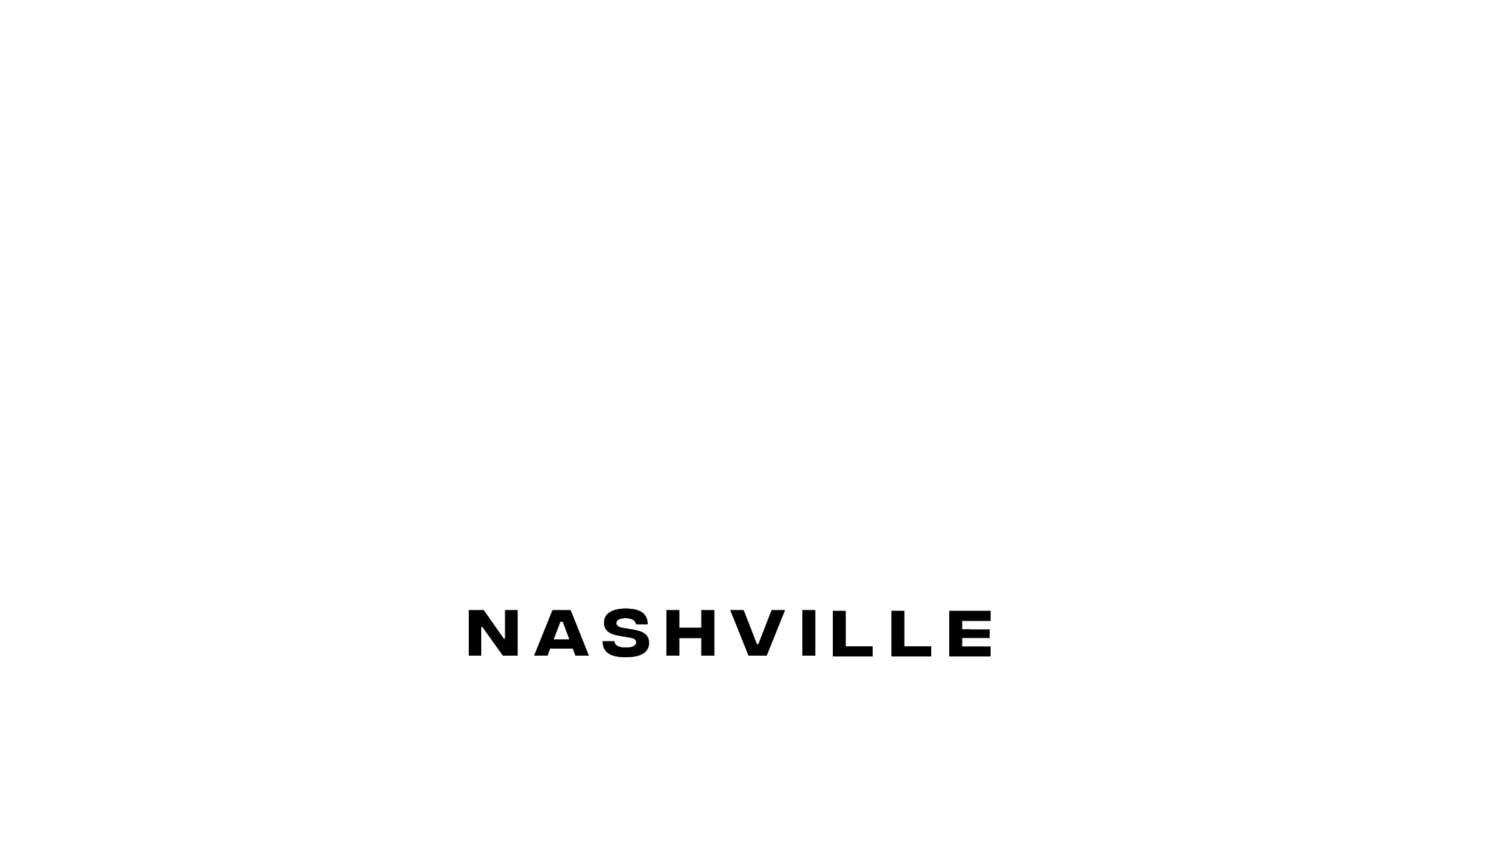 Music Venue Alliance - Nashville